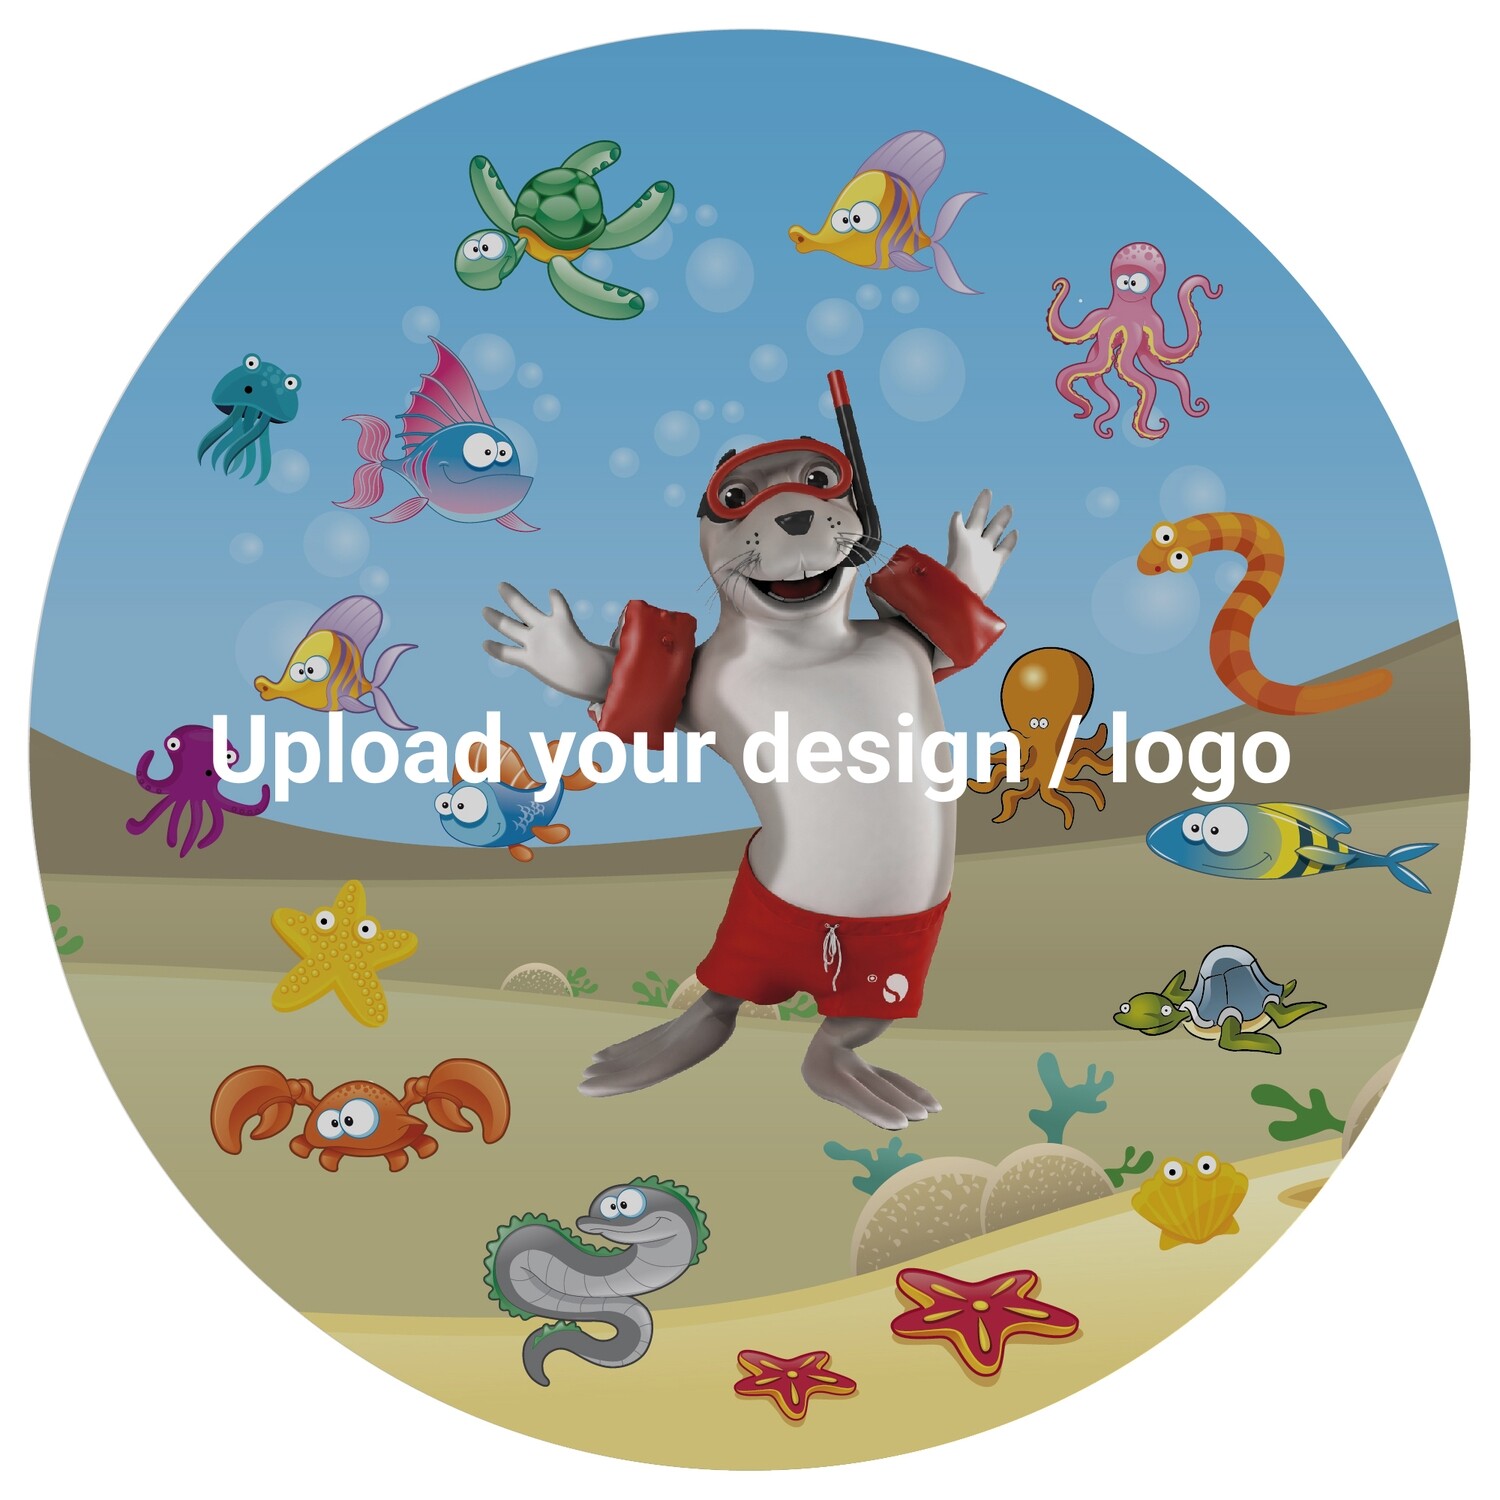 Underwater Graphic - Upload your design, logo or mascot (1m2)